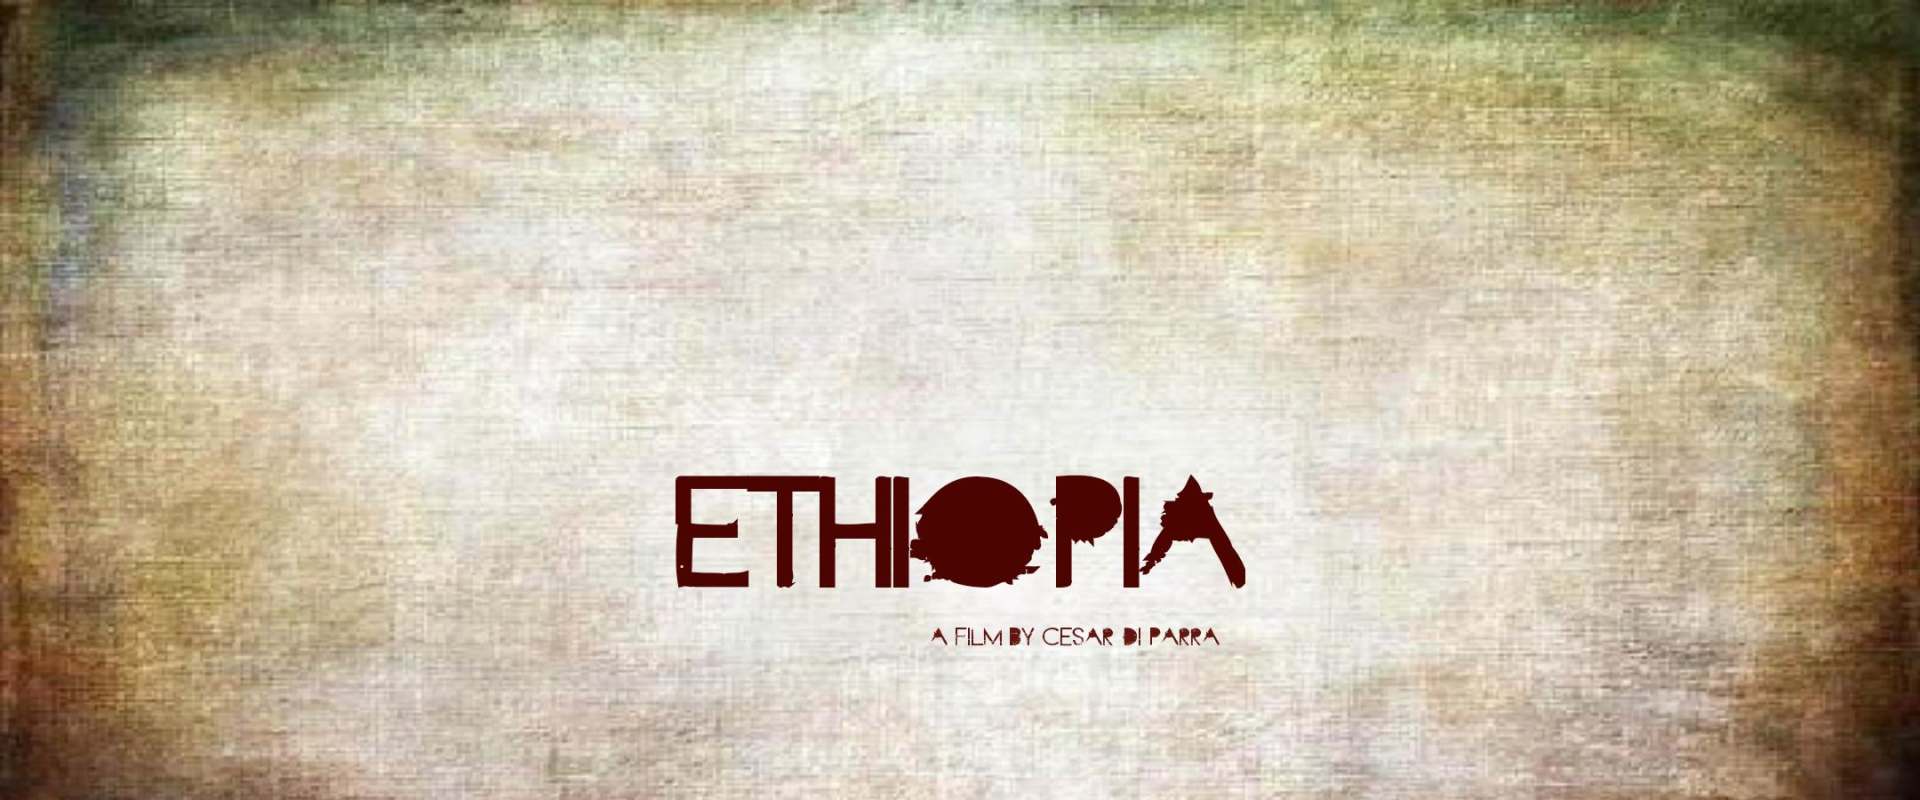 Ethiopia background 2